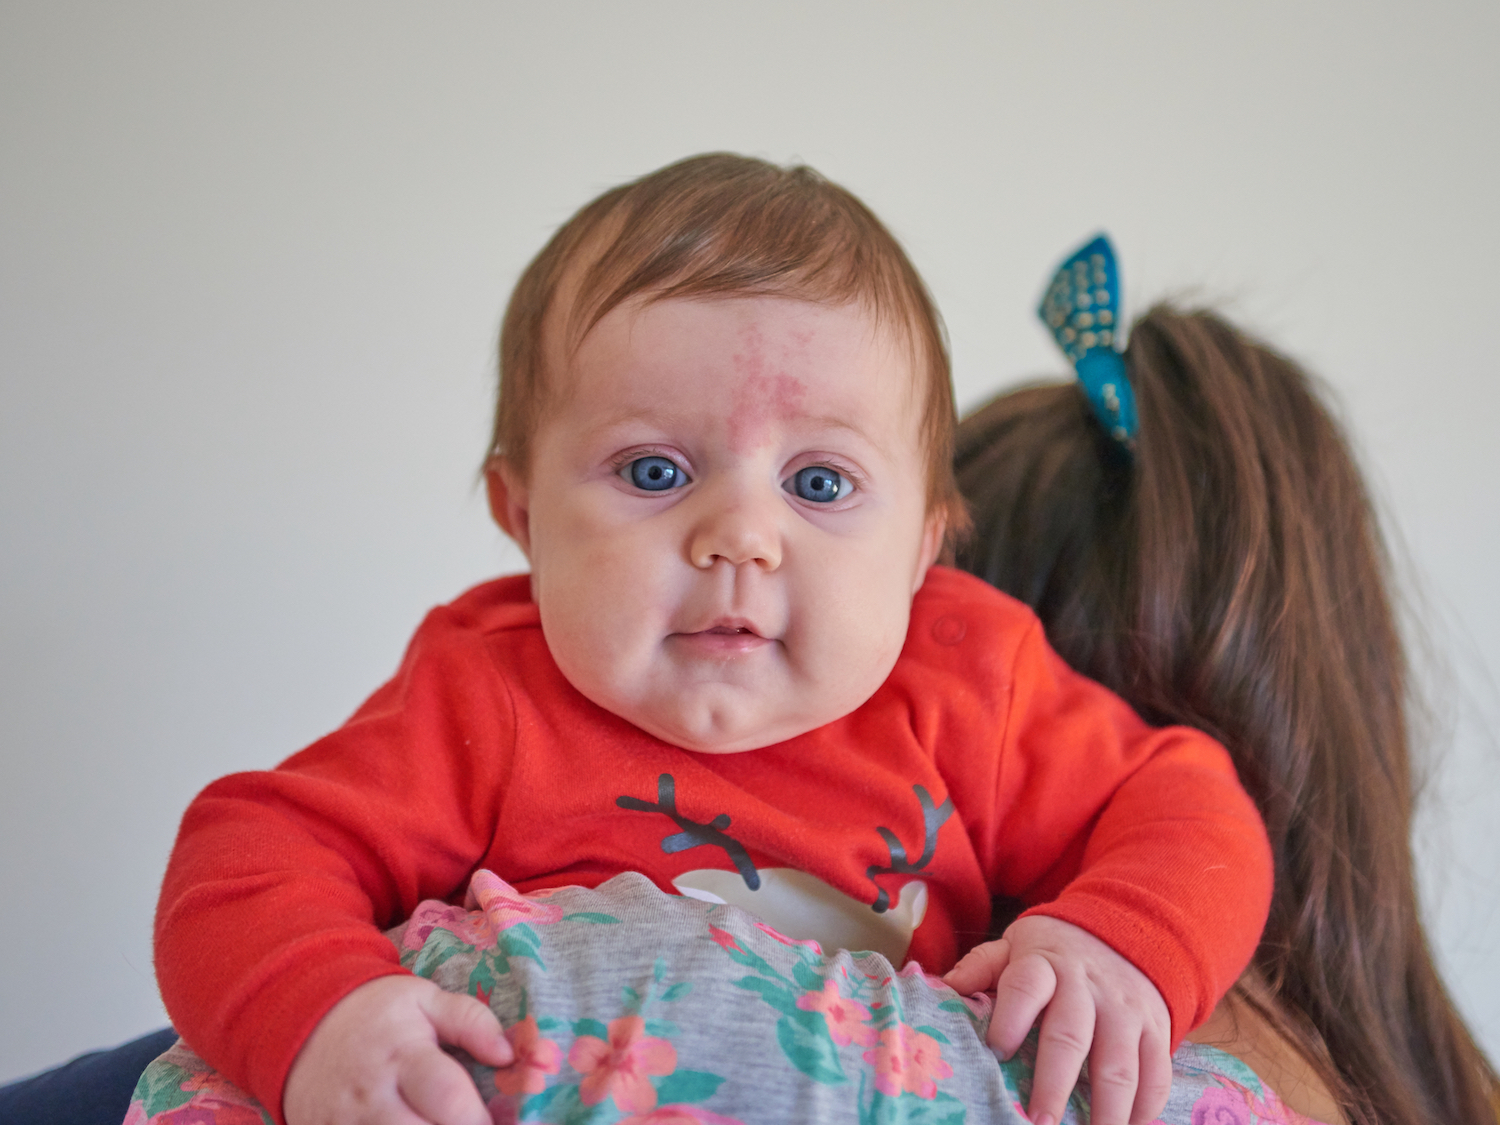 Baby with Birthmark